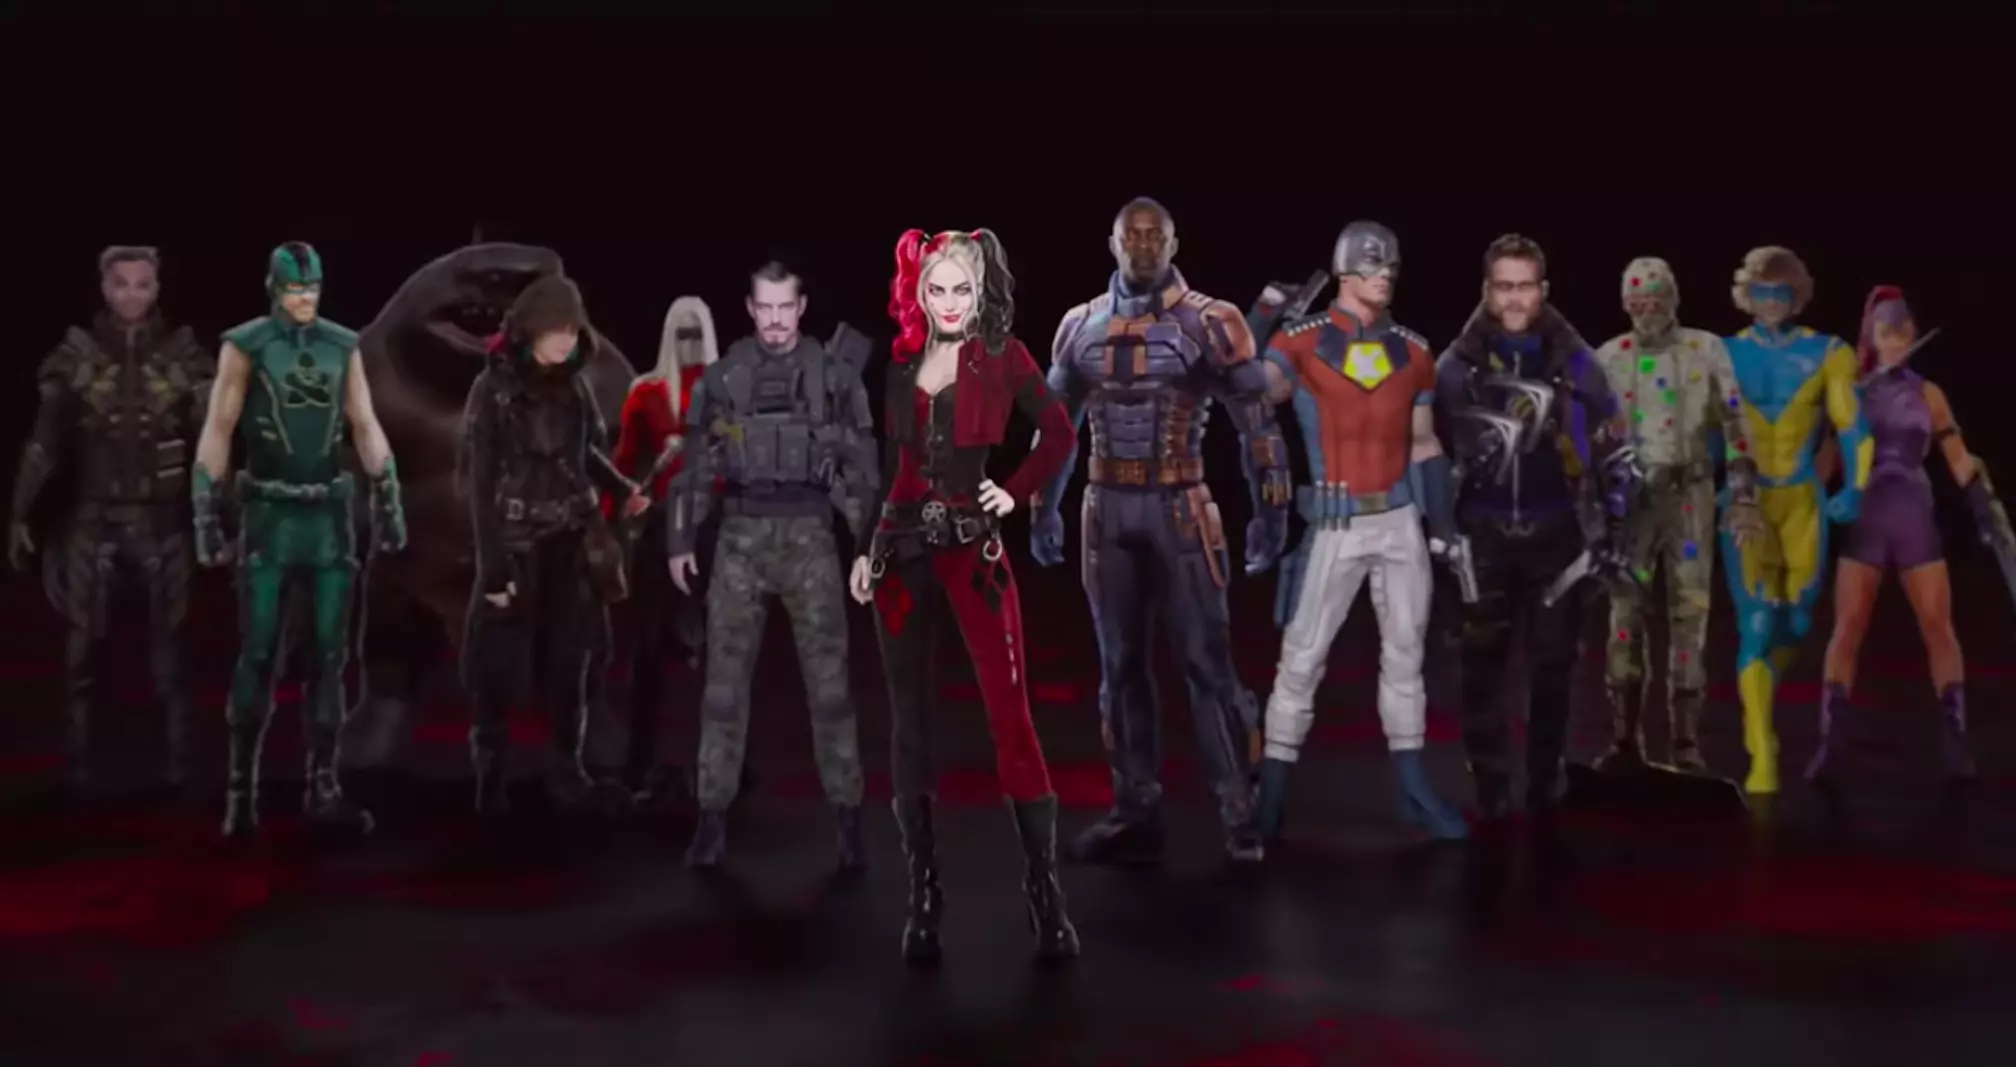 Check Out The Assembled Suicide Squad Cast